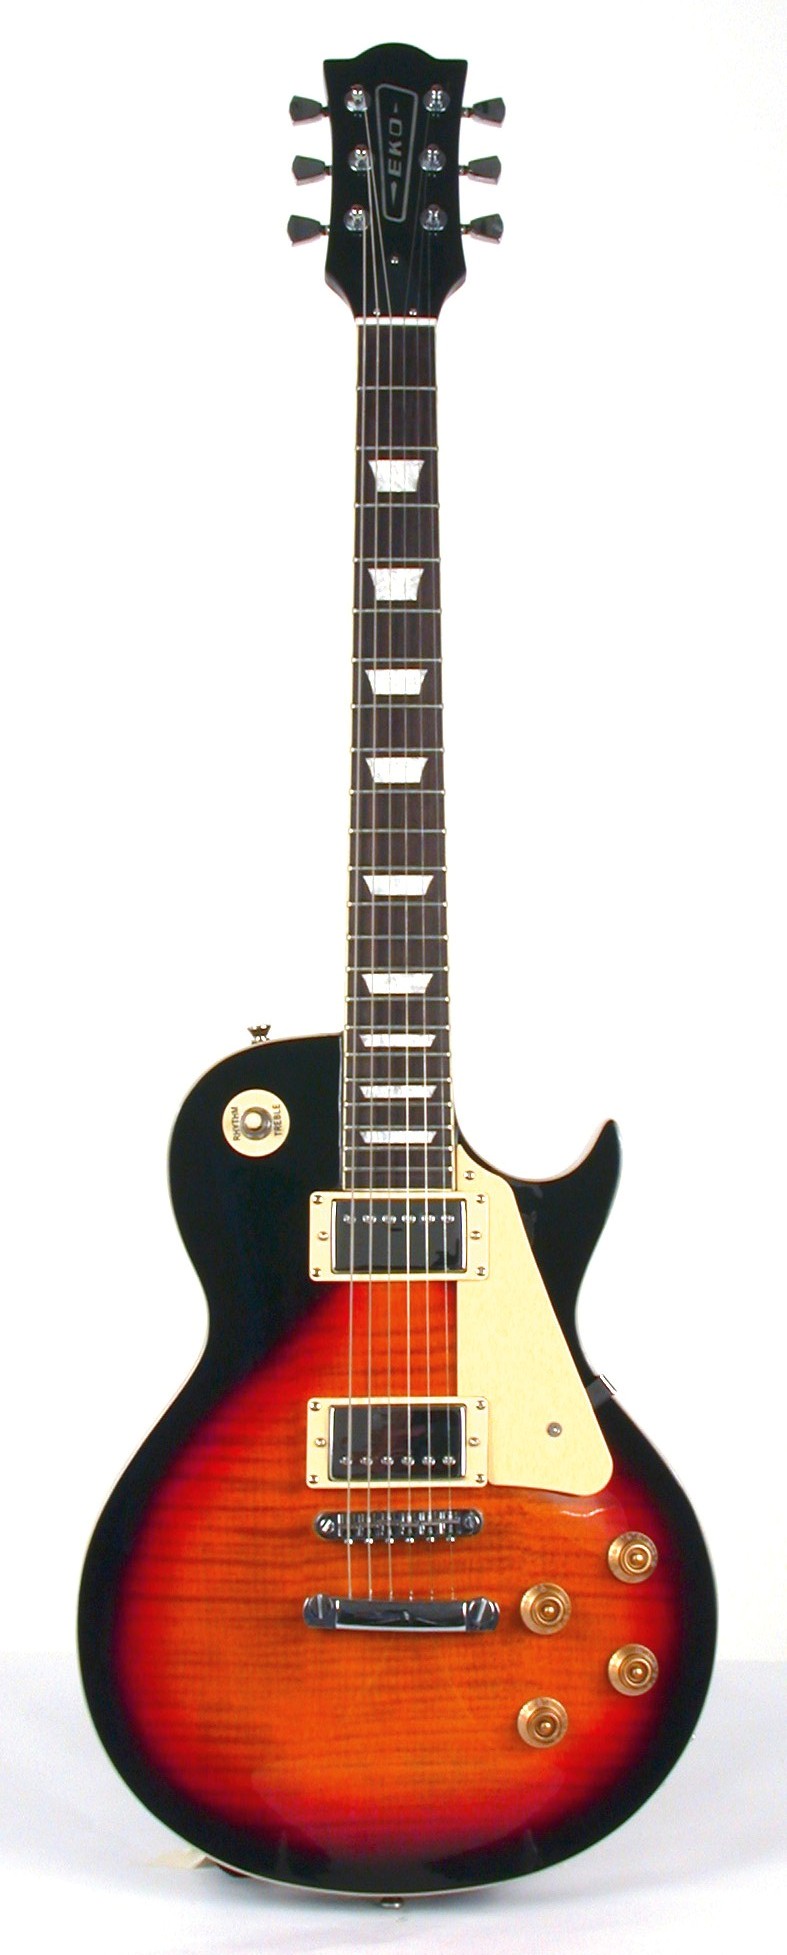 Eko chitarra elettrica VL-480 Aged Cherry Sunburst Flamed 4/4